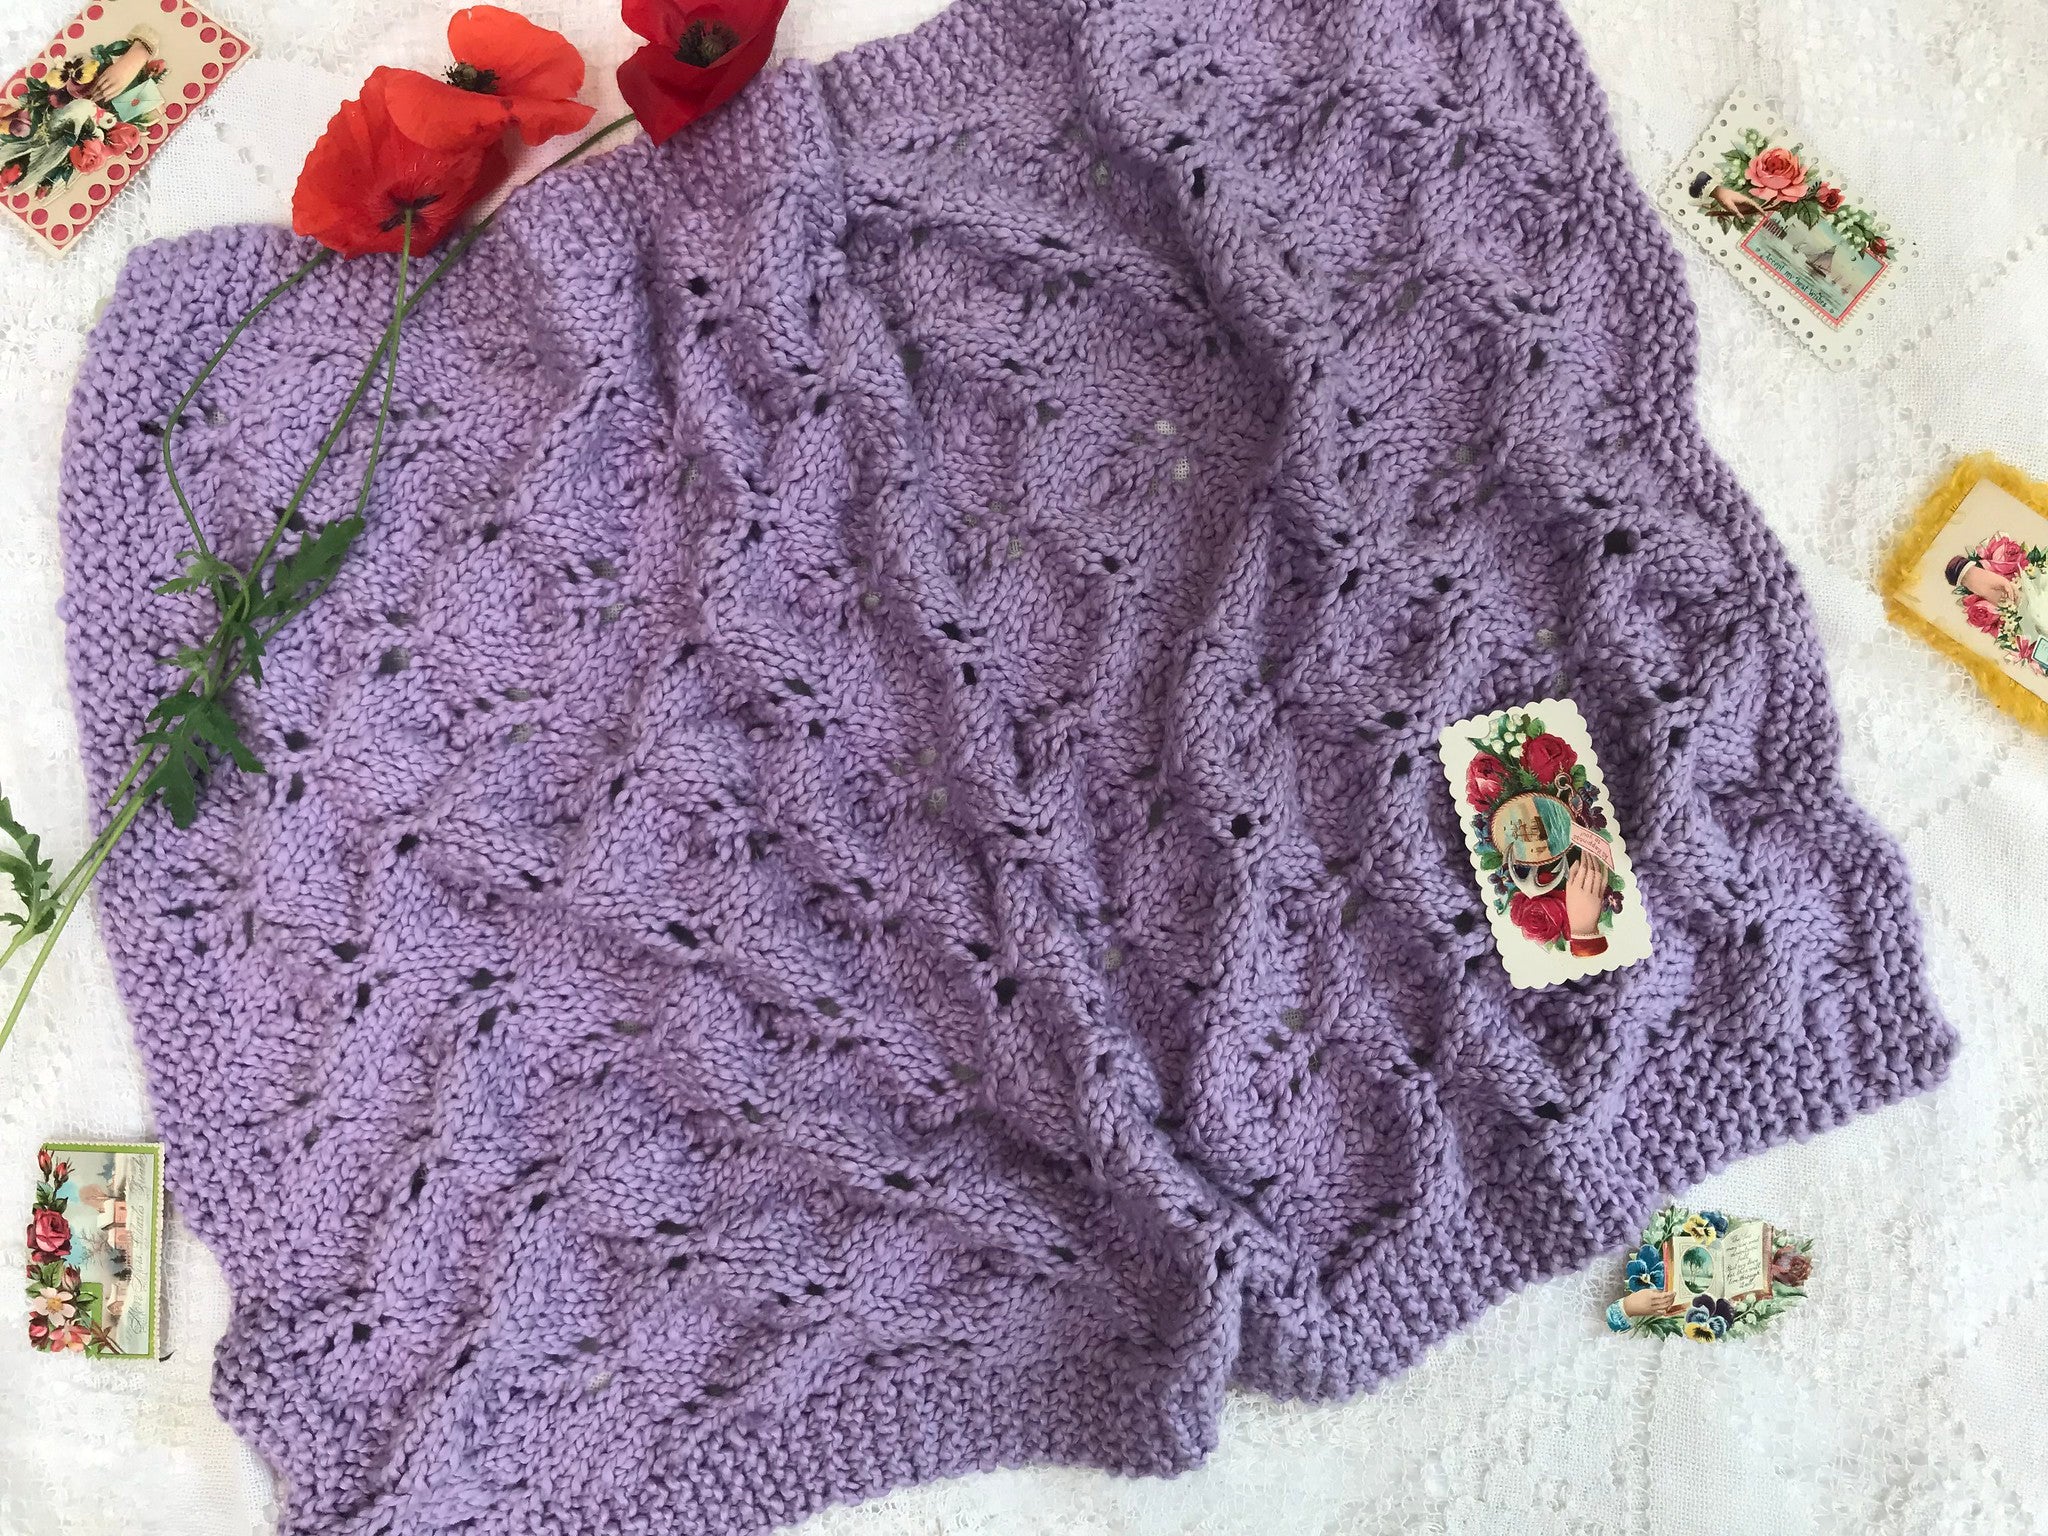 DIY Kit - Crochet Baby Blanket - Merino No. 5 – Loopy Mango